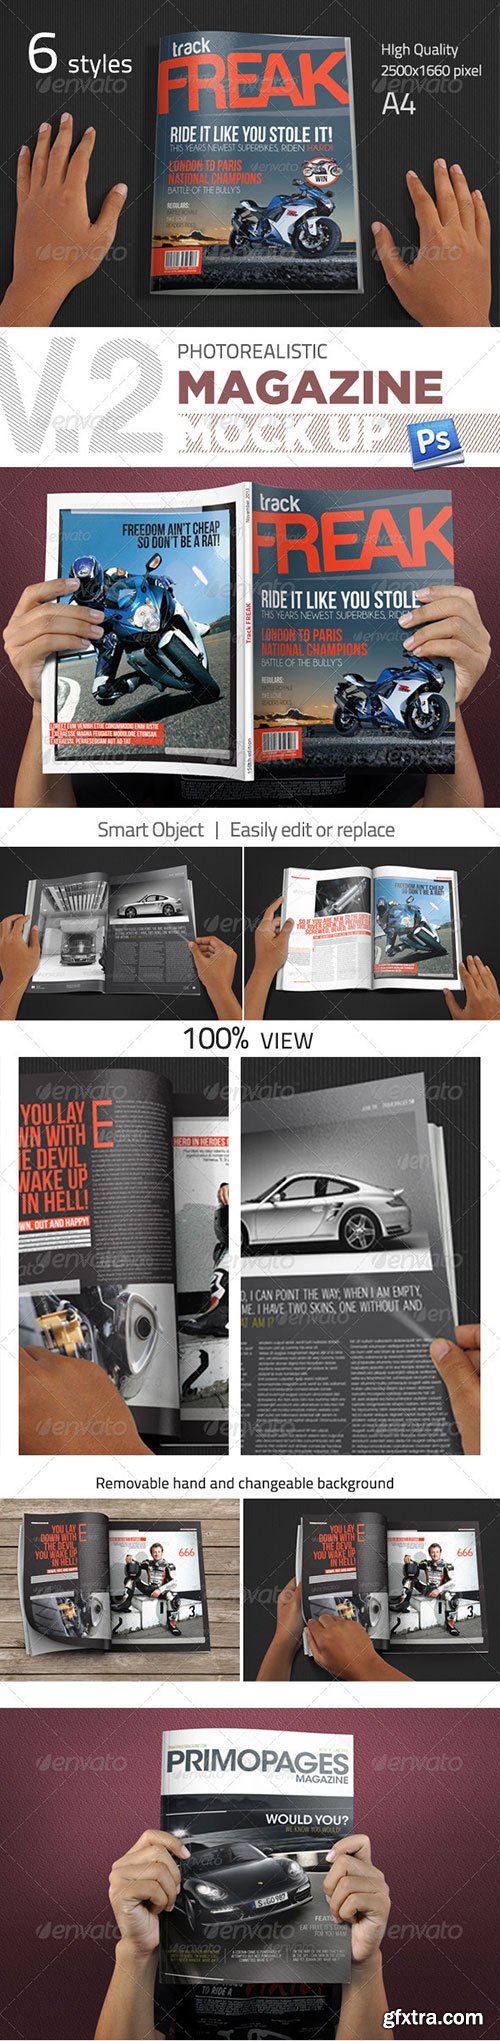 GraphicRiver - Photorealistic Magazine Mockup V.2